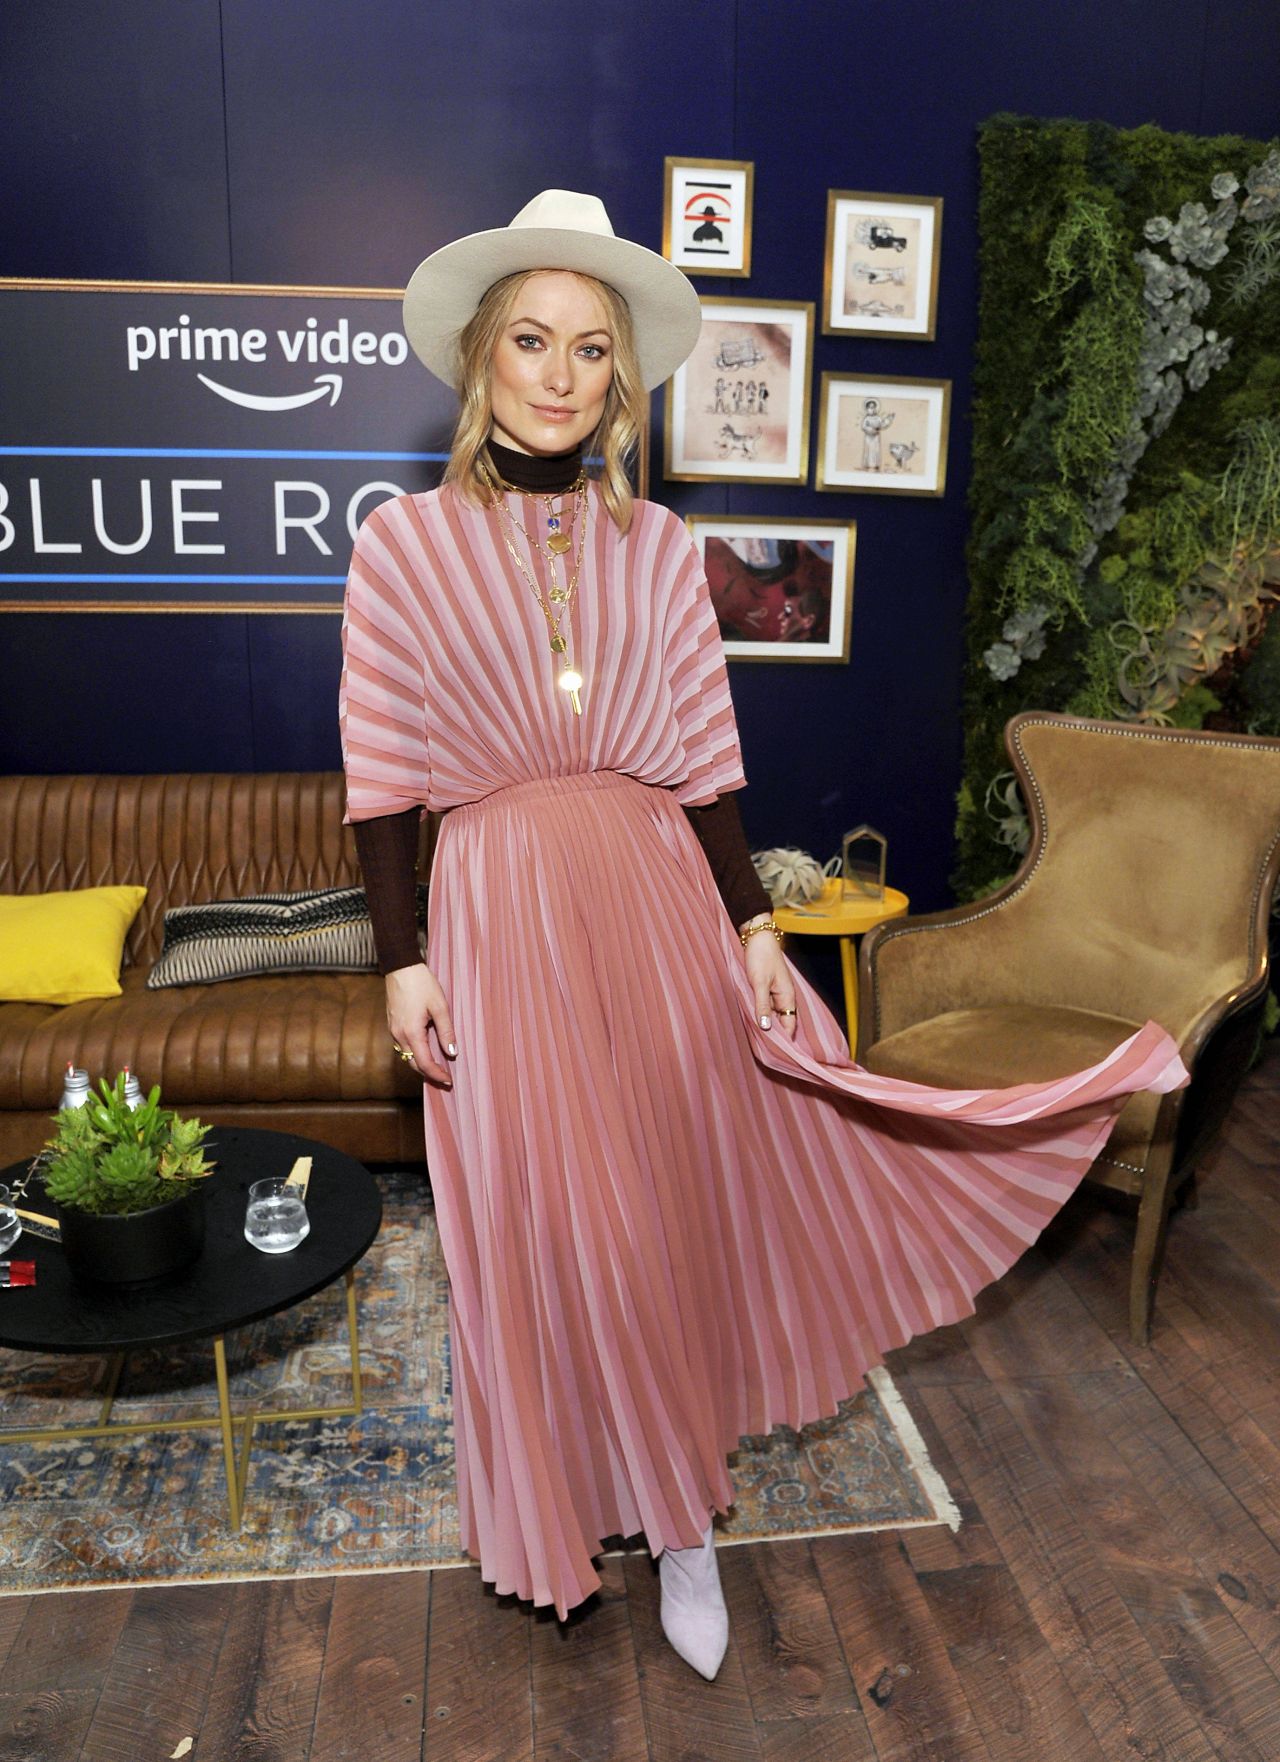 Olivia Wilde Prime Video Blue Room At The 2019 Sxsw Festival In